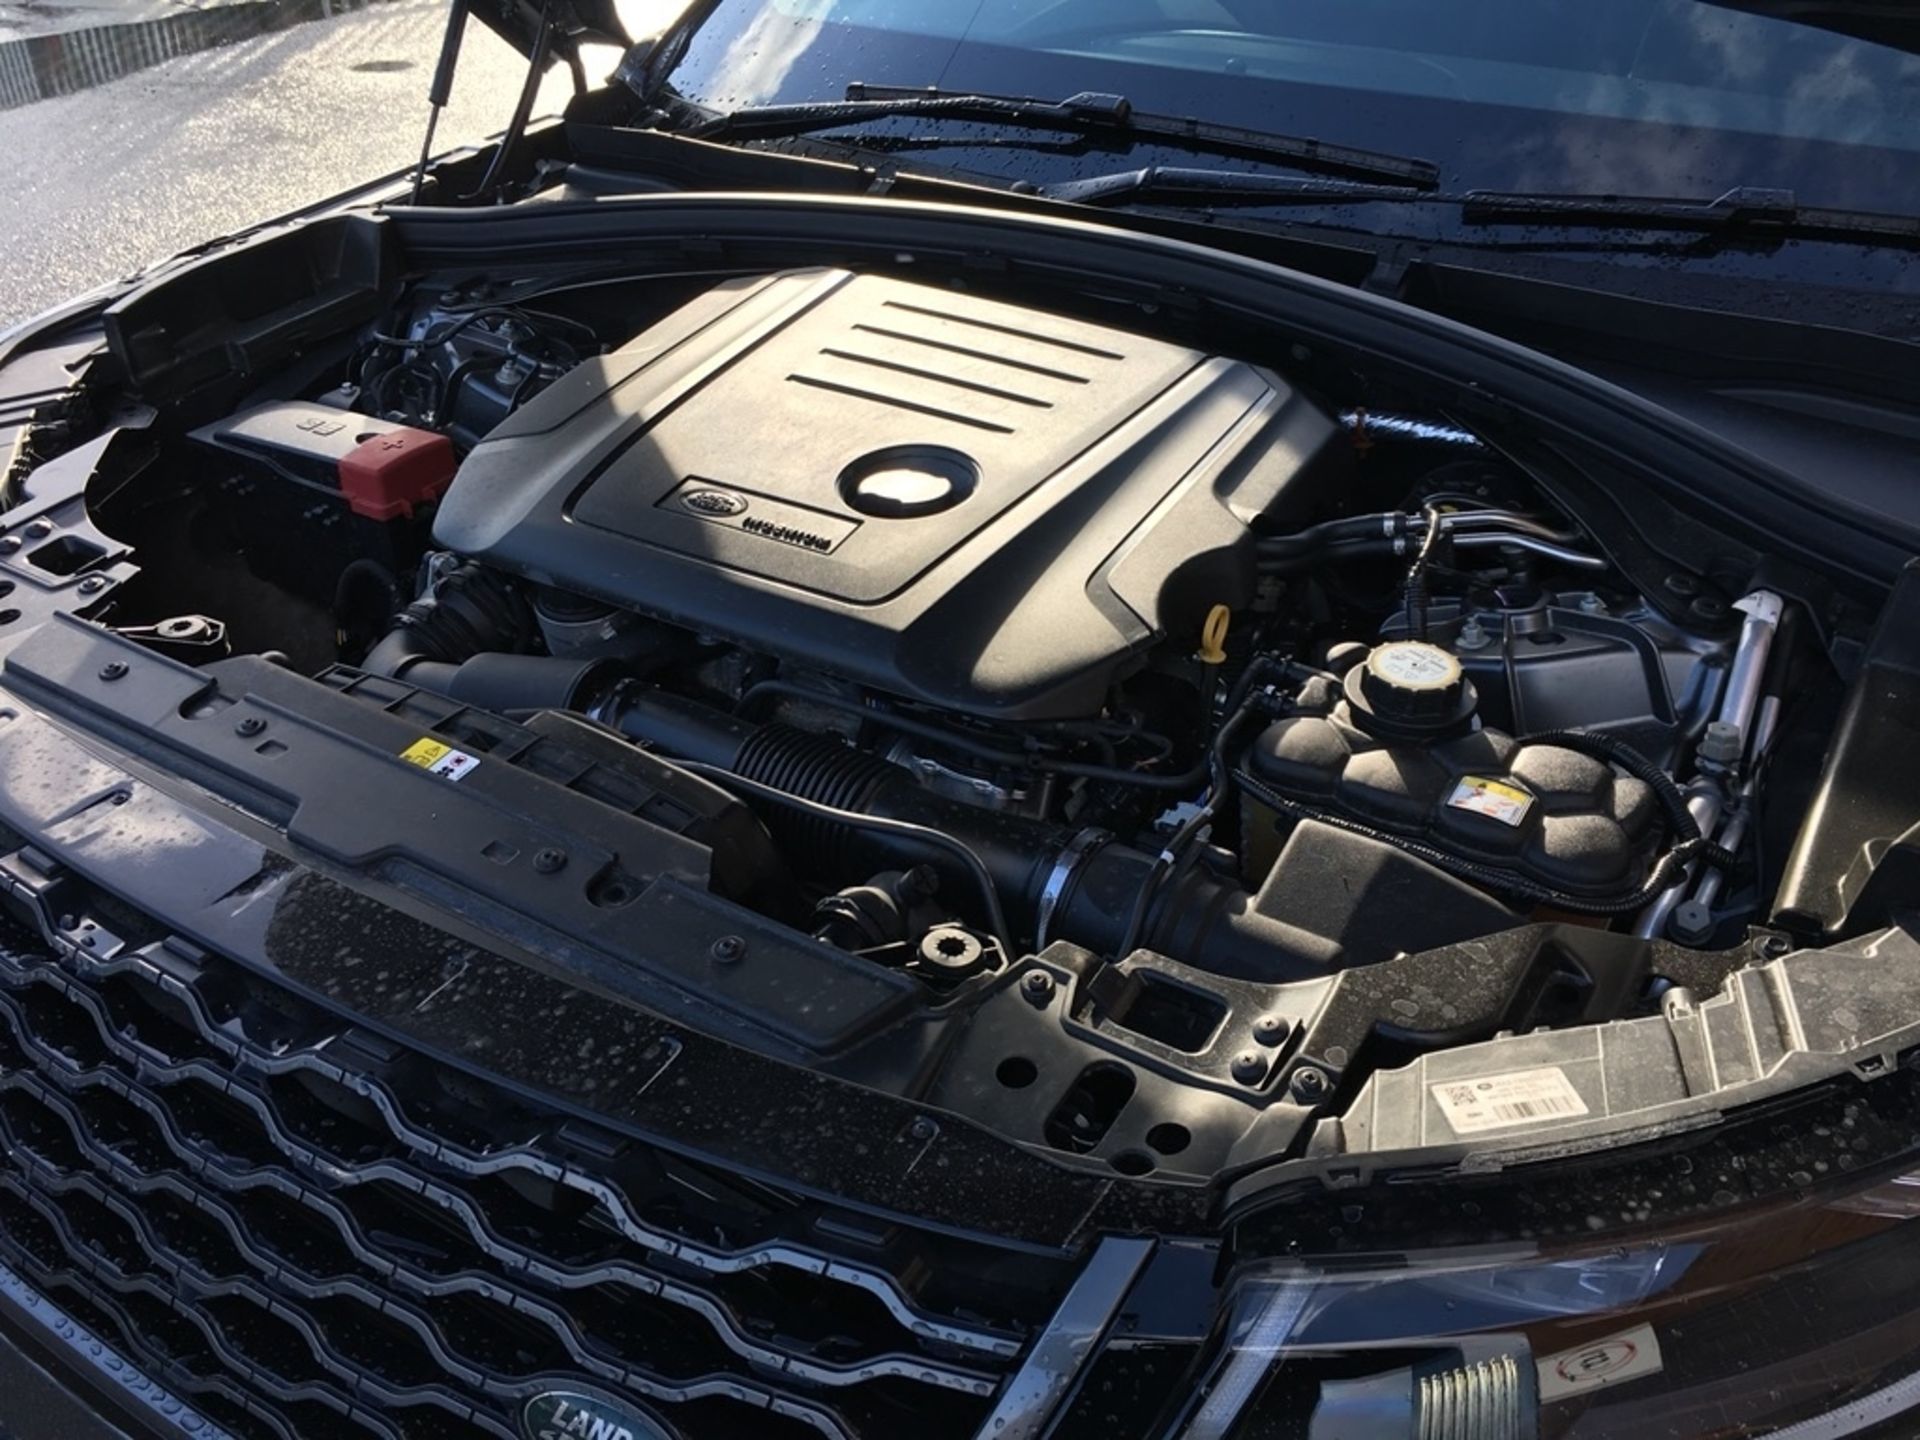 Range Rover Velar 2.0 D180 R-Dynamic S 4x4 5dr – Automatic- Diesel – Grey Reg: PJ67 GCU – 2017 - Image 7 of 7